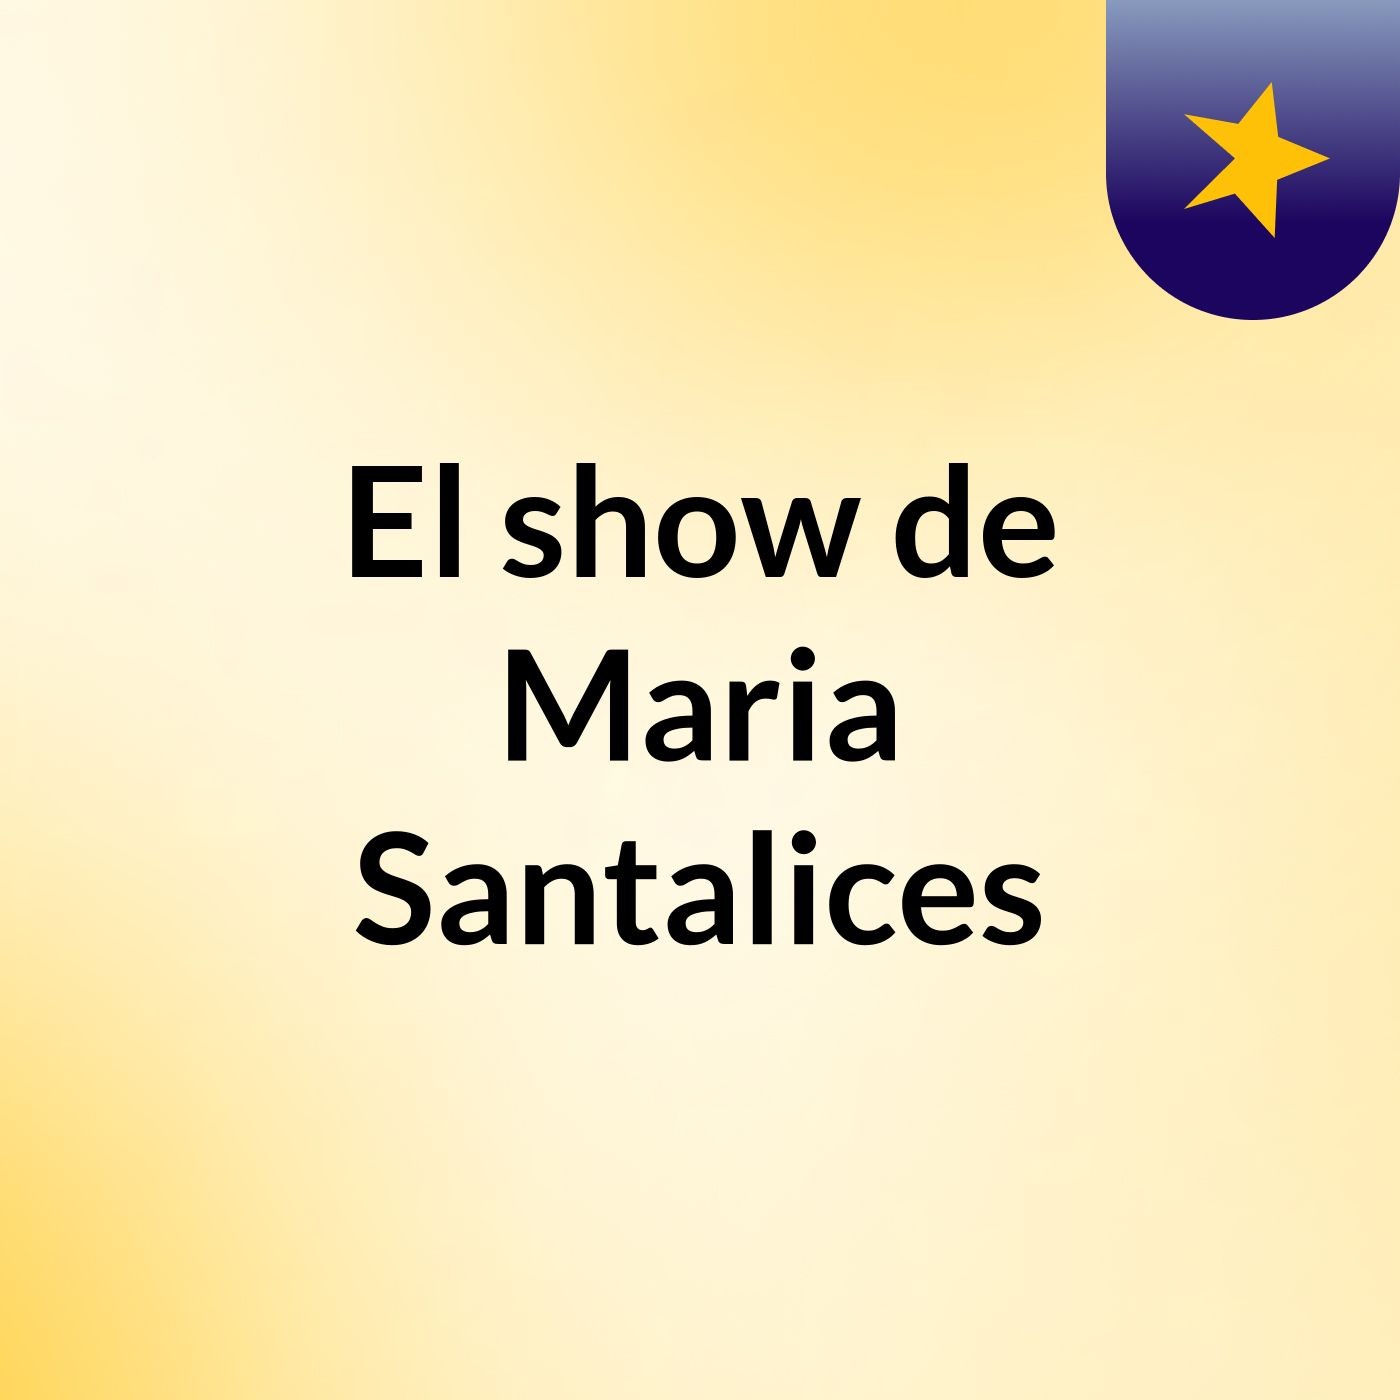 El show de Maria Santalices